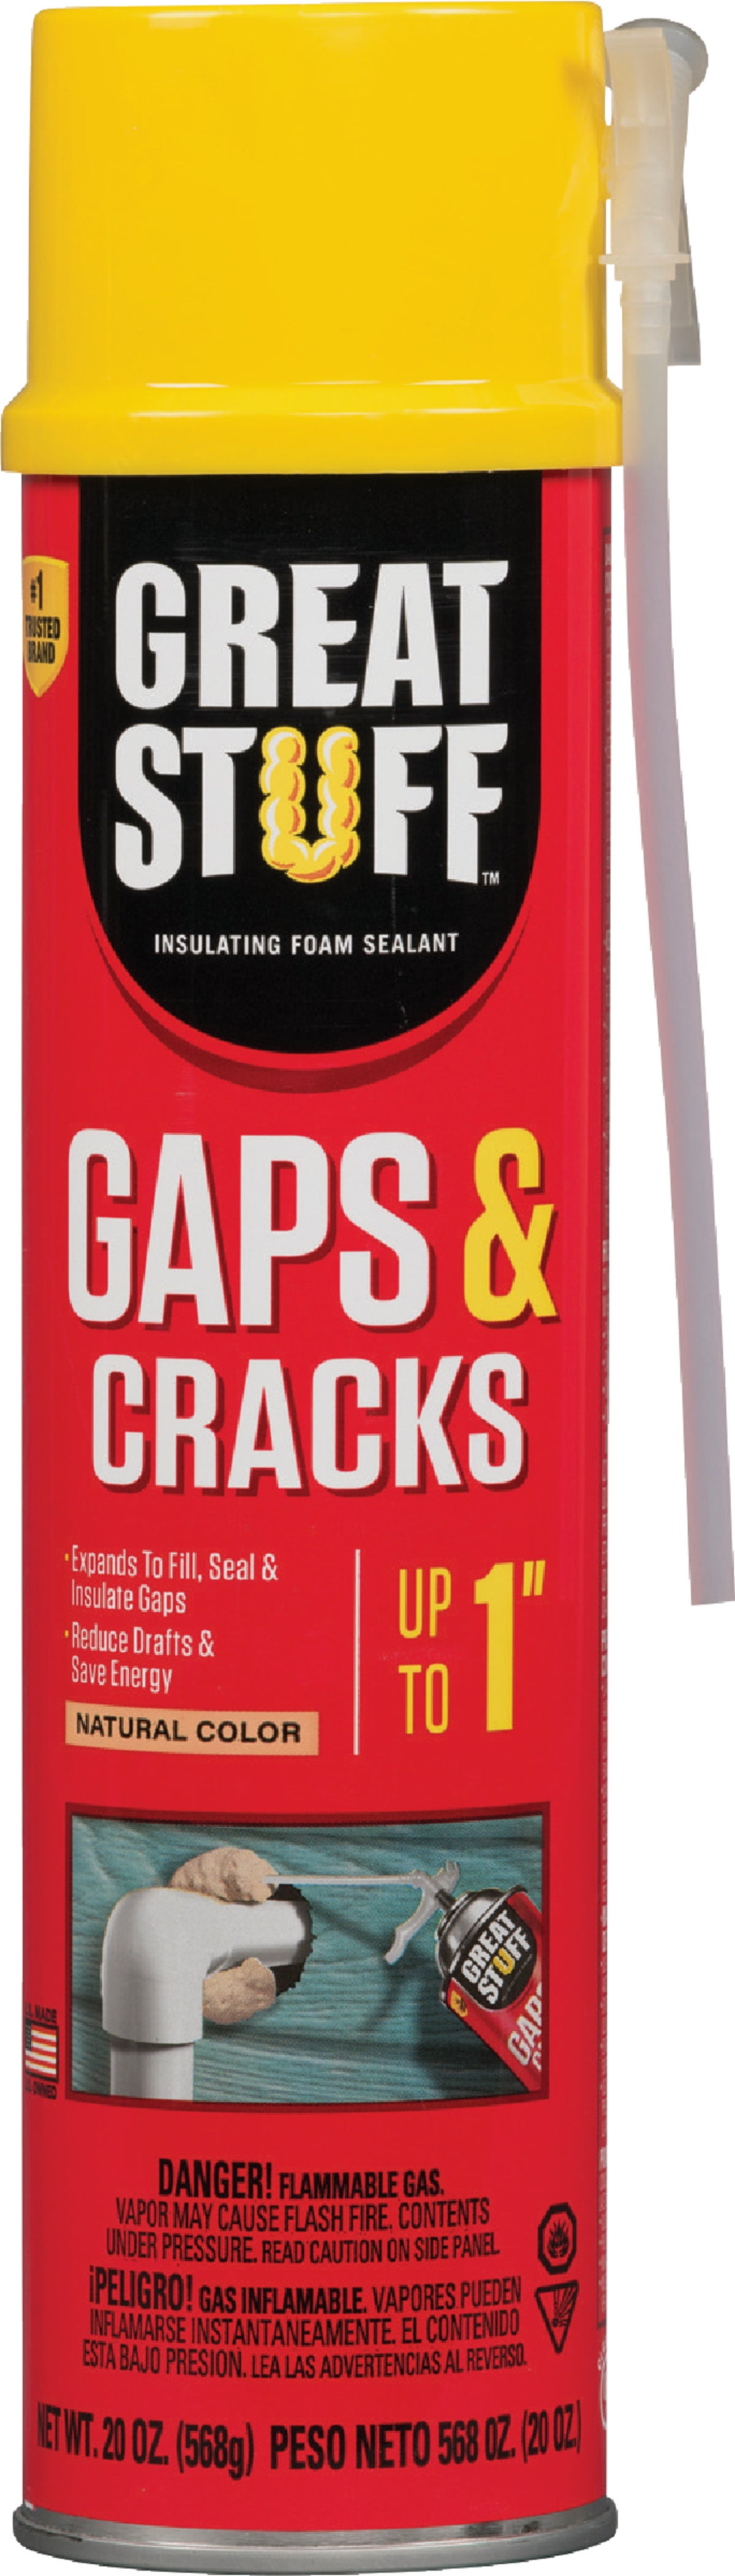 Great Stuff 12 oz Gaps & Cracks Smart Dispenser Insulating Foam Sealant